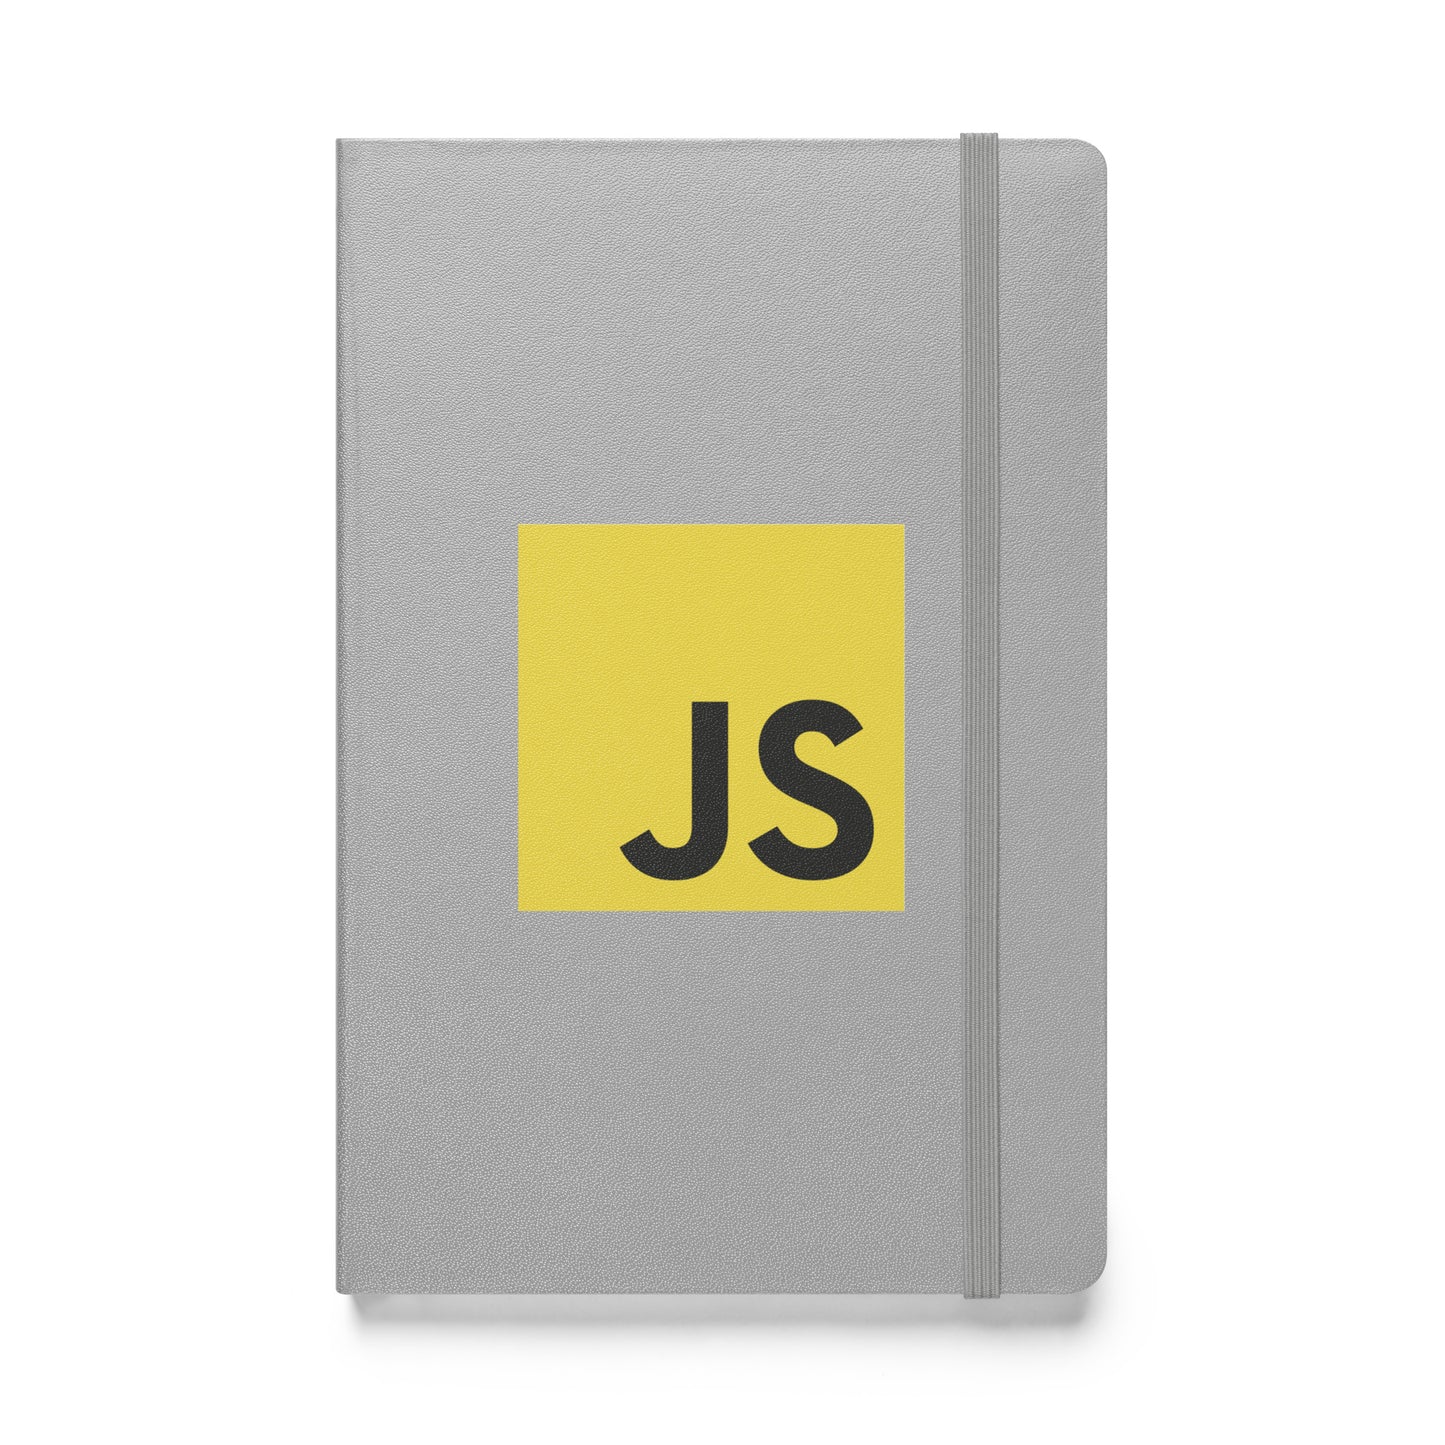 JavaScript Hardcover Bound Notebook